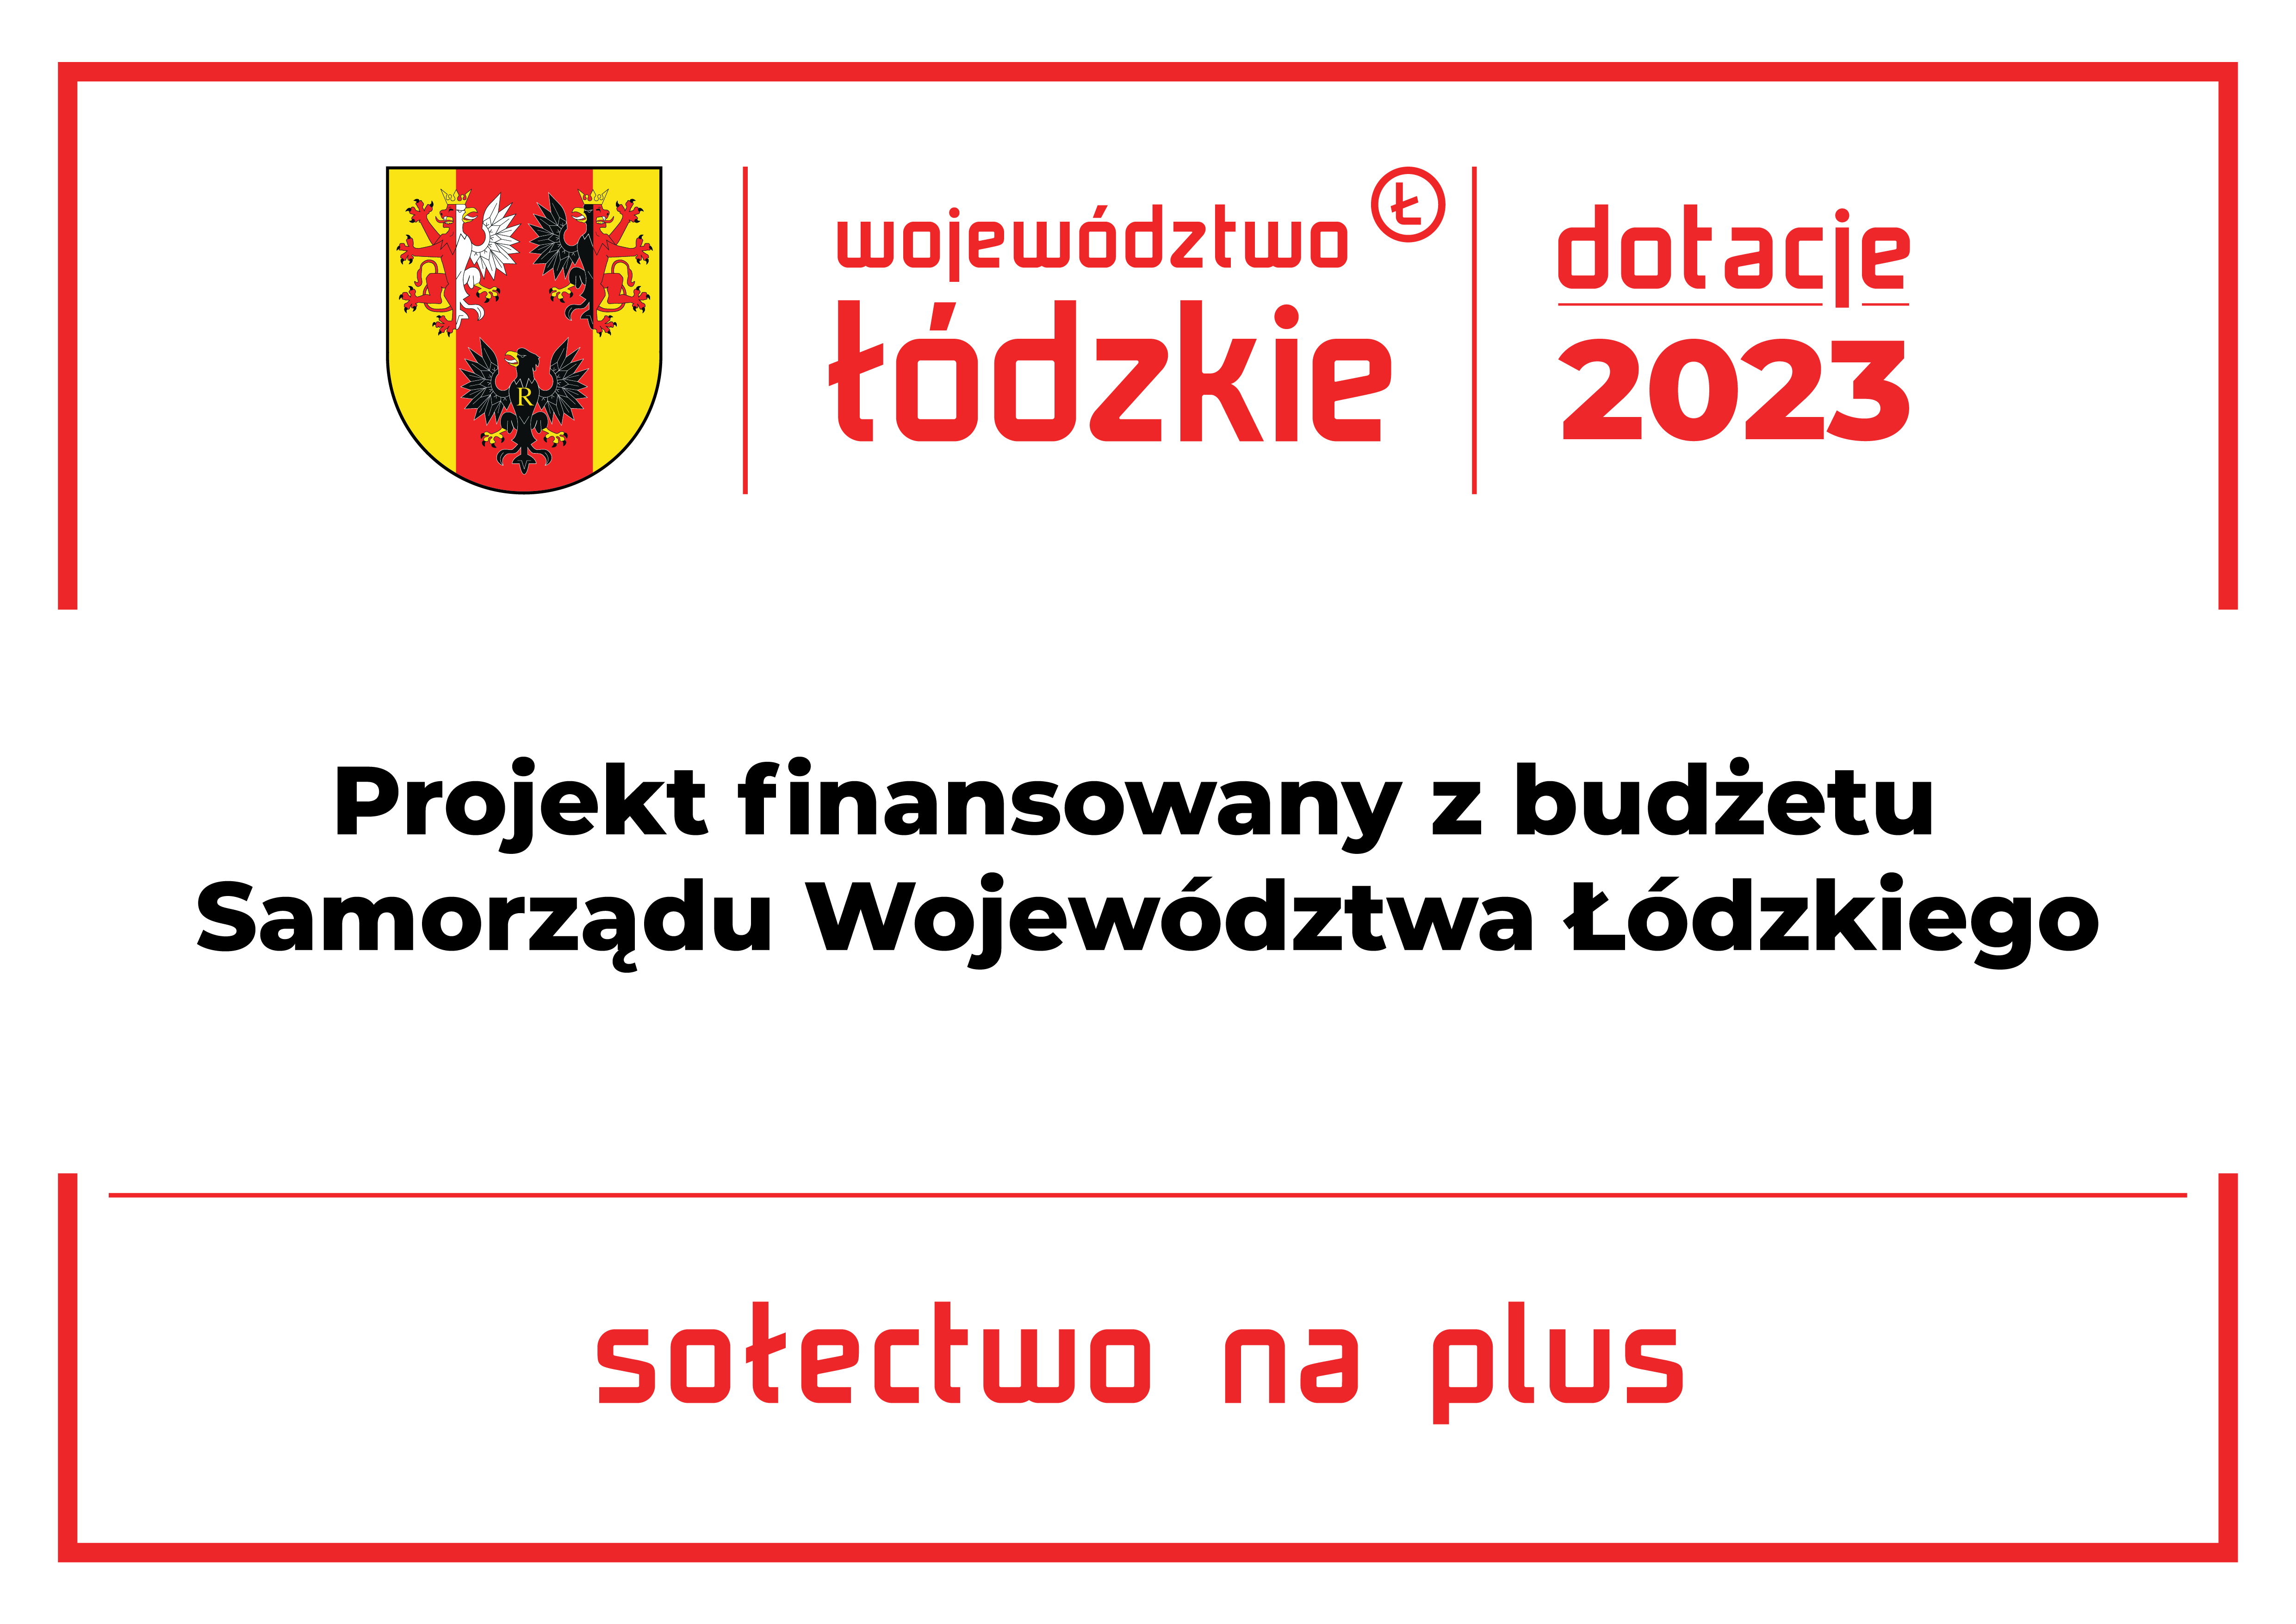 Dotacje_2023_Tablice_Solectwo_na_Plus_finans.jpg (2 MB)